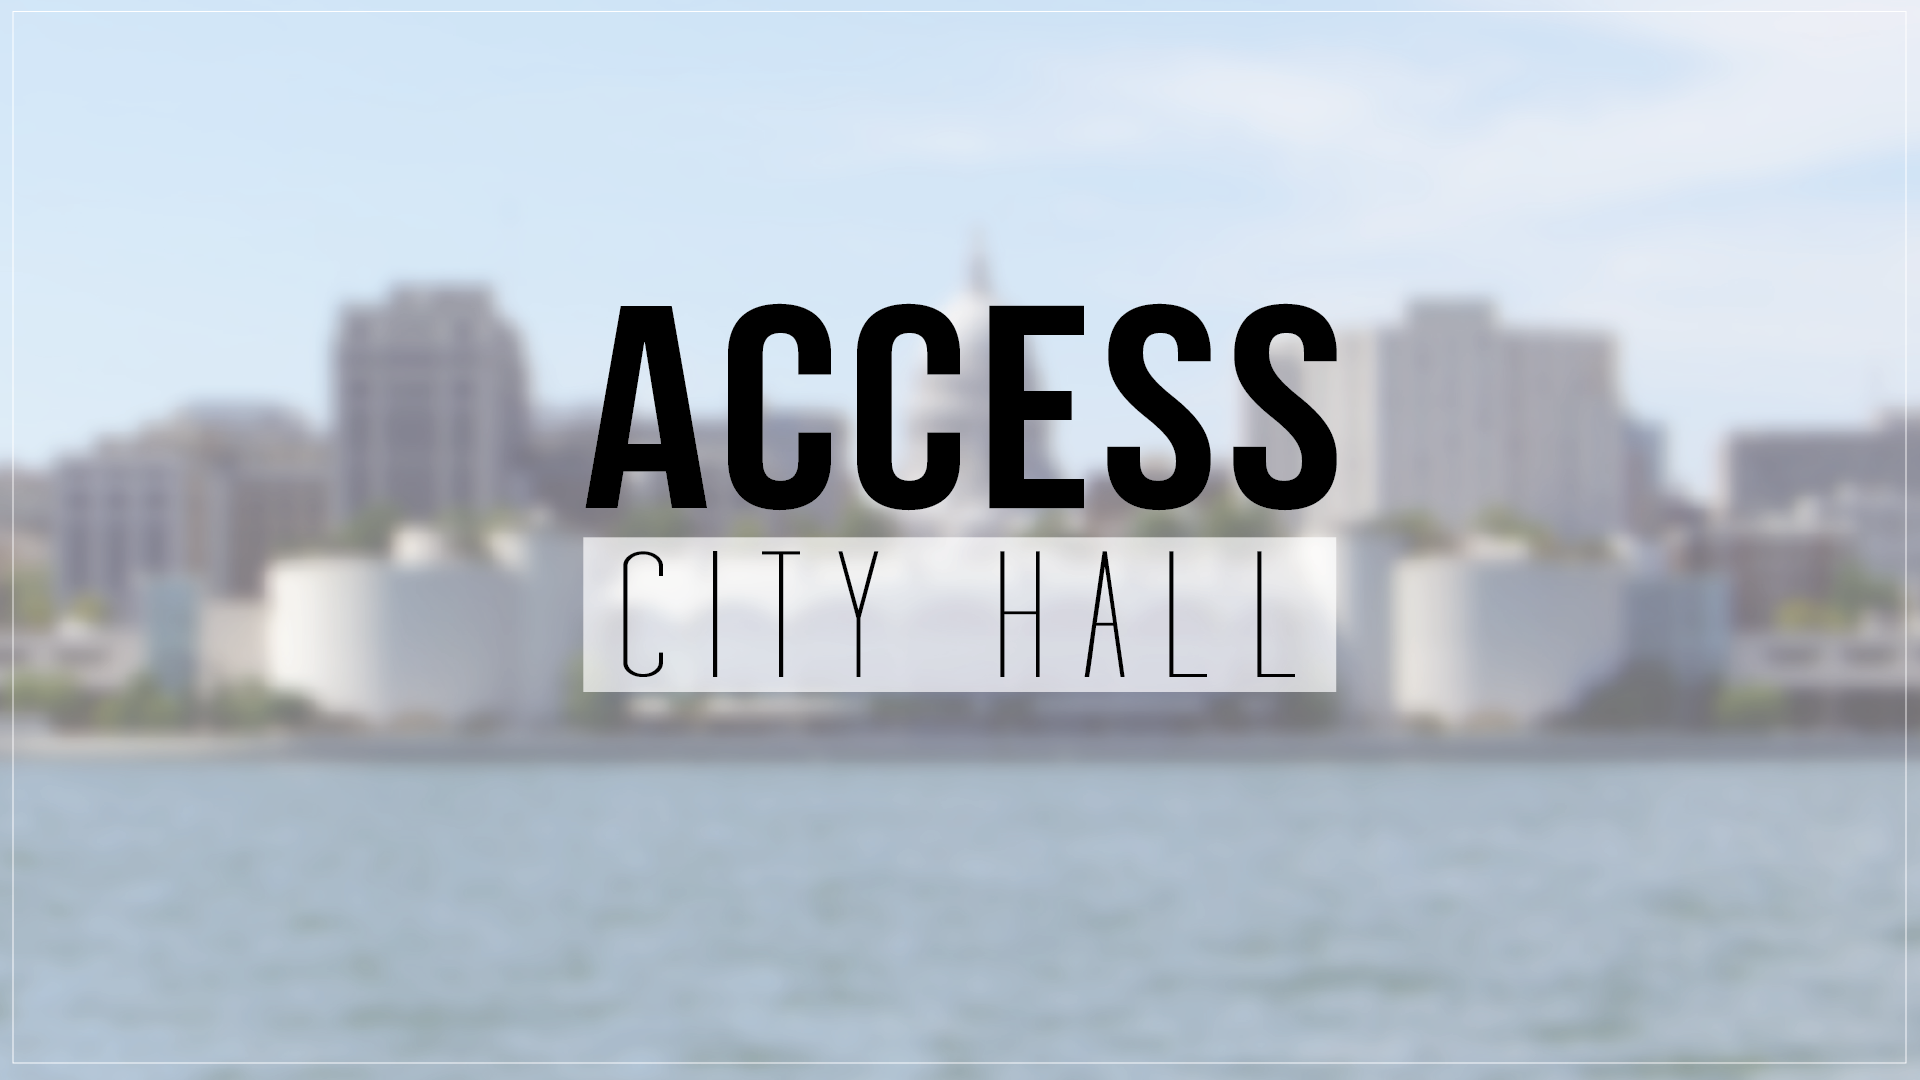 Access City Hall